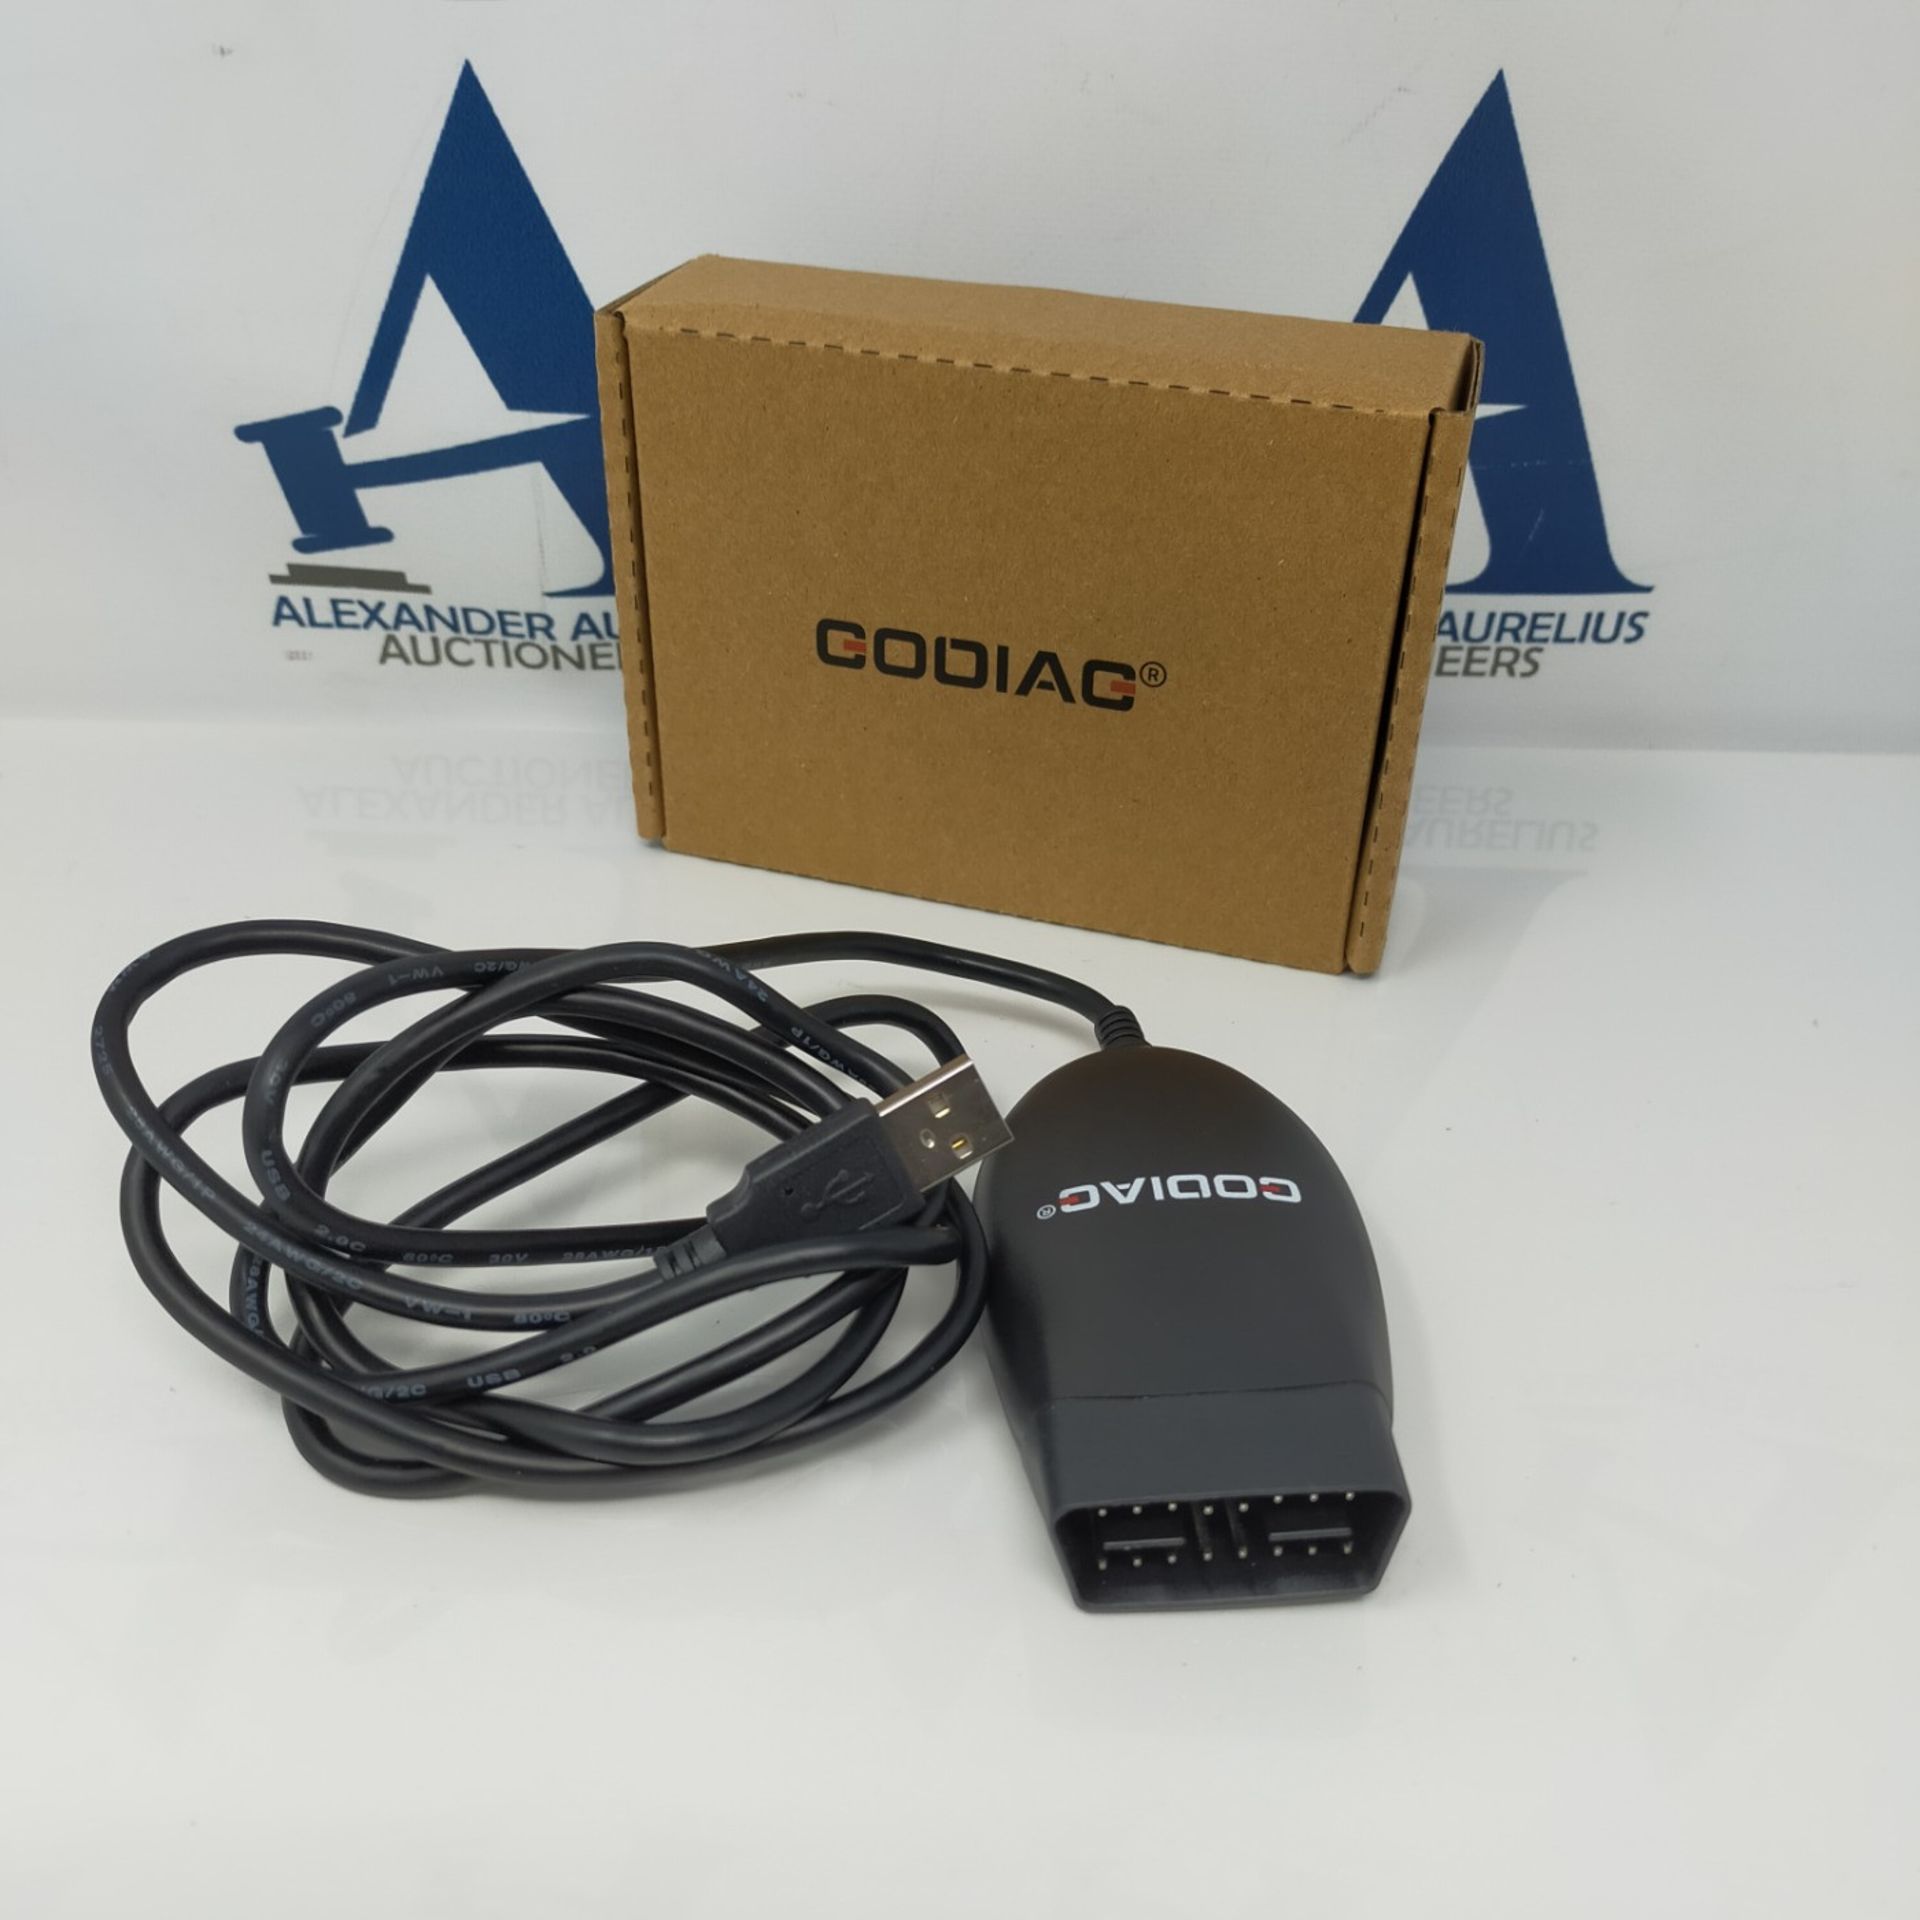 J2534 Openport 2.0 Cable, GODIAG OBD2 USB Adapter ECU Diagnostic Tool, Flash Chip Tunn - Image 8 of 8